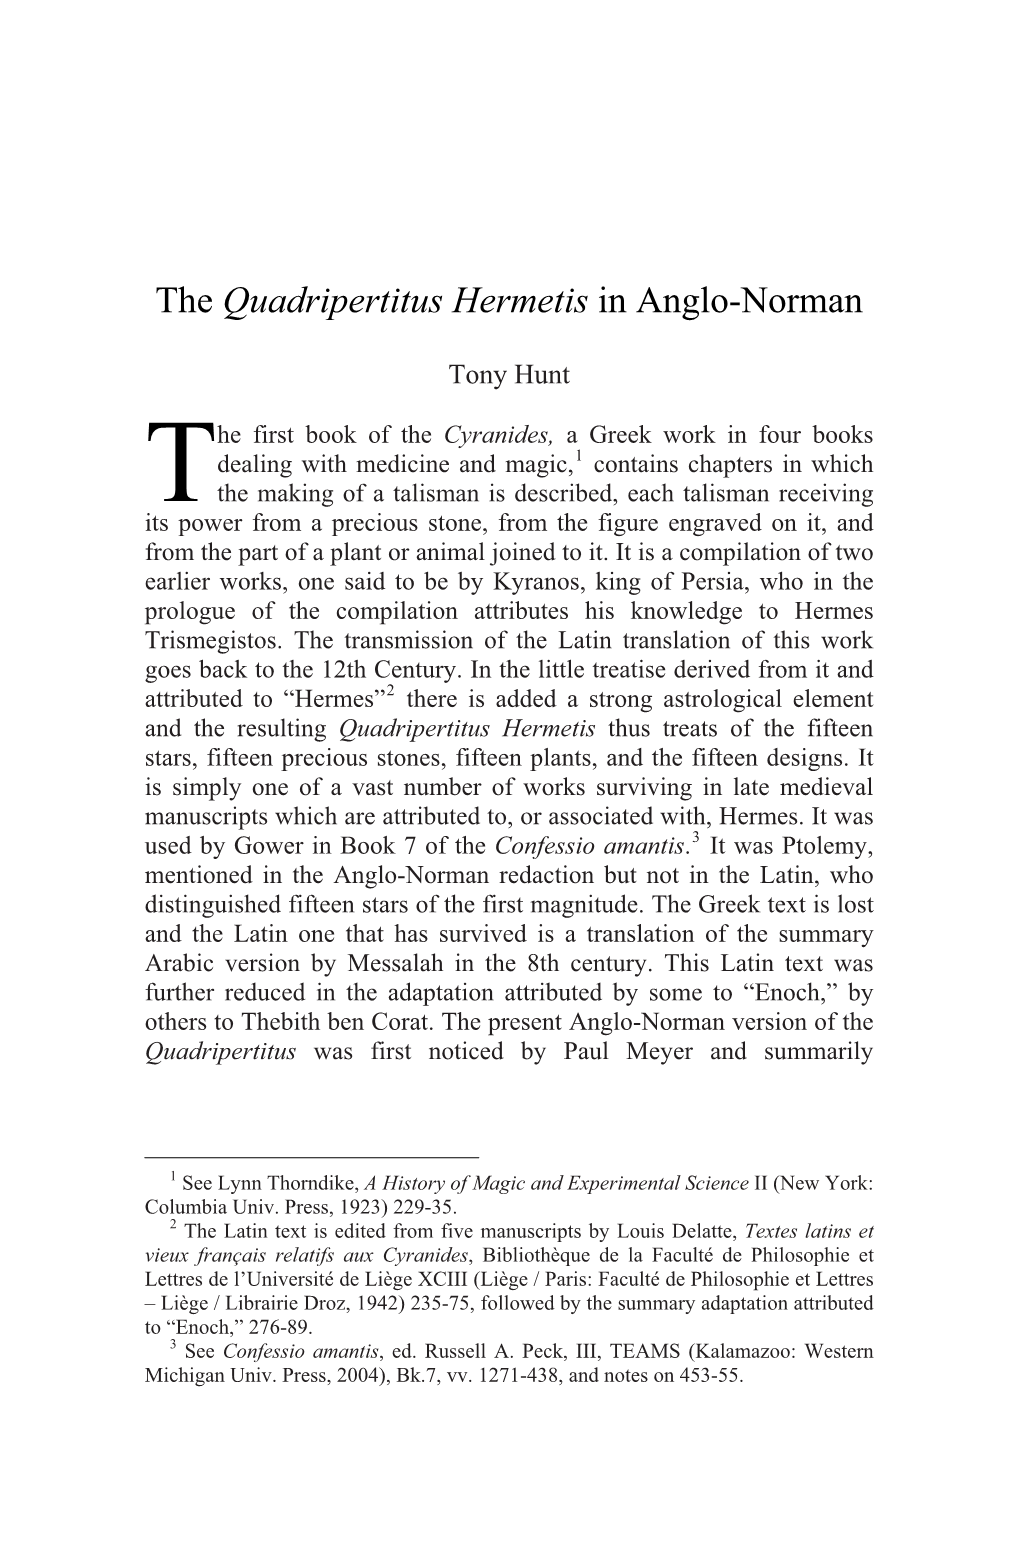 The Quadripertitus Hermetis in Anglo-Norman